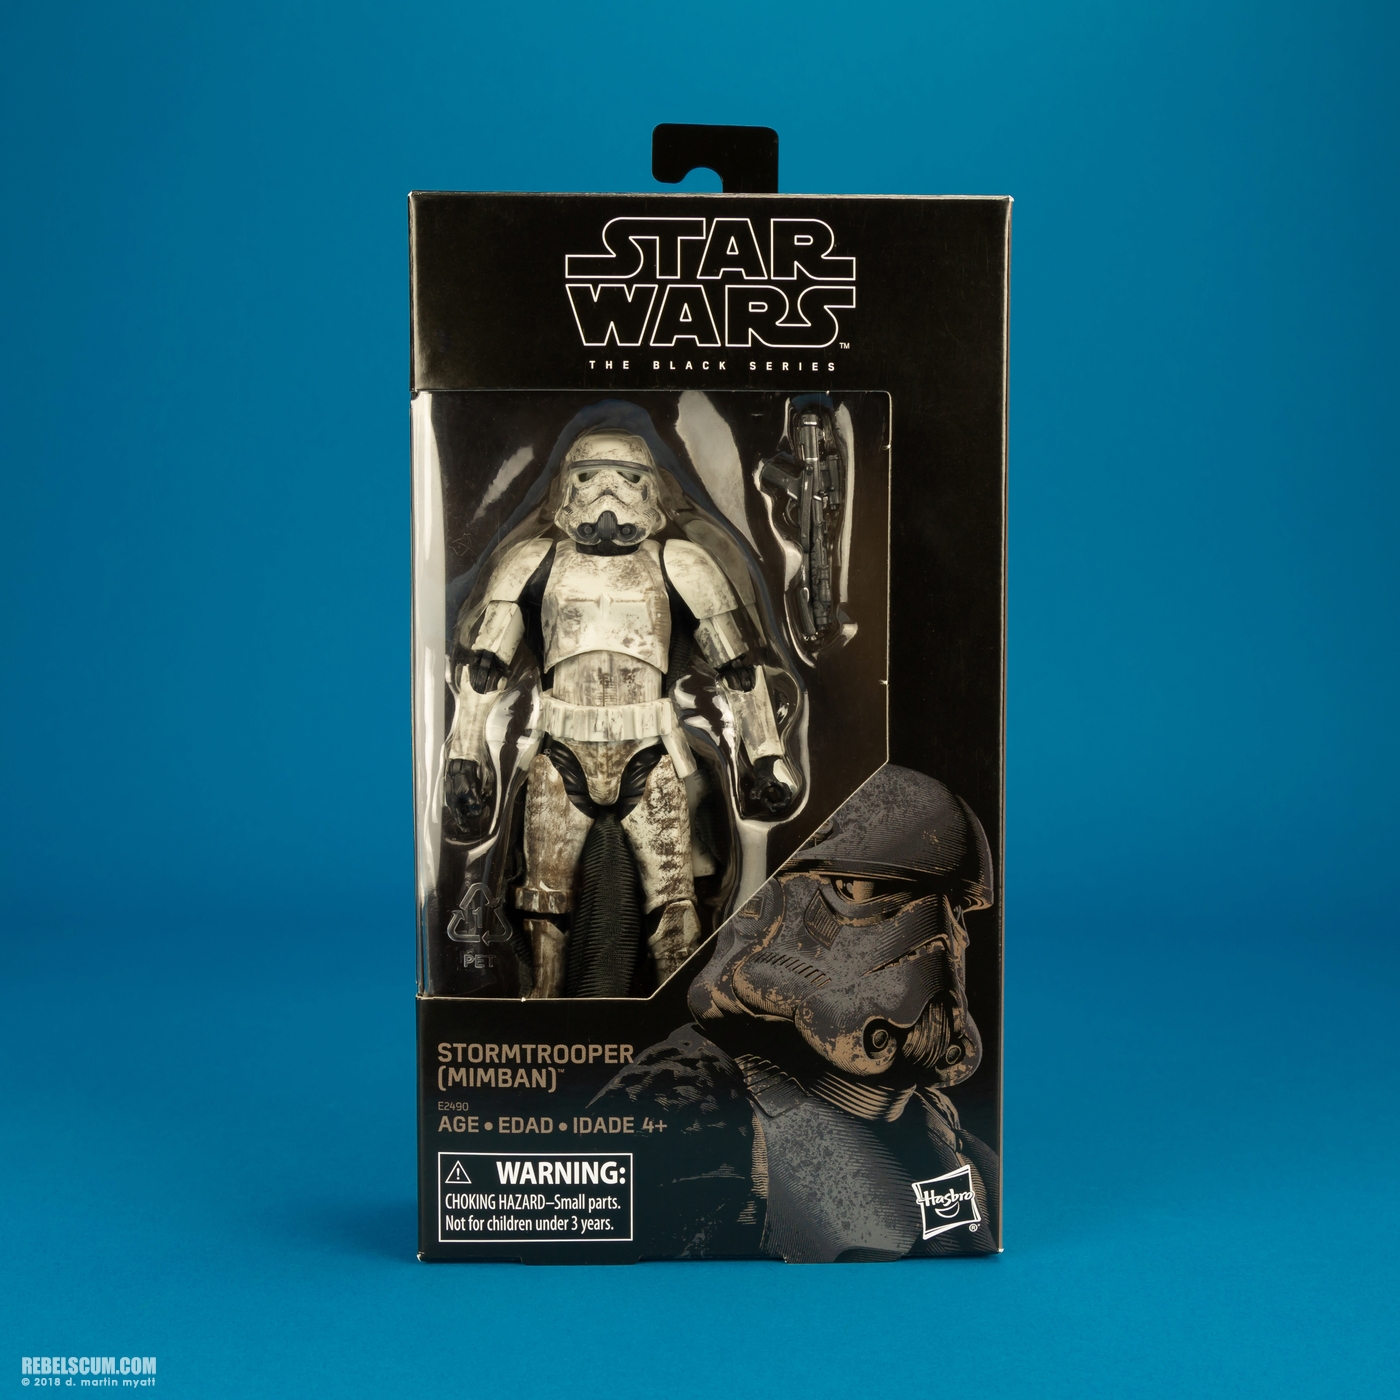 Stormtrooper-Mimban-Star-Wars-The-Black-Series-6-inch-E2490-013.jpg